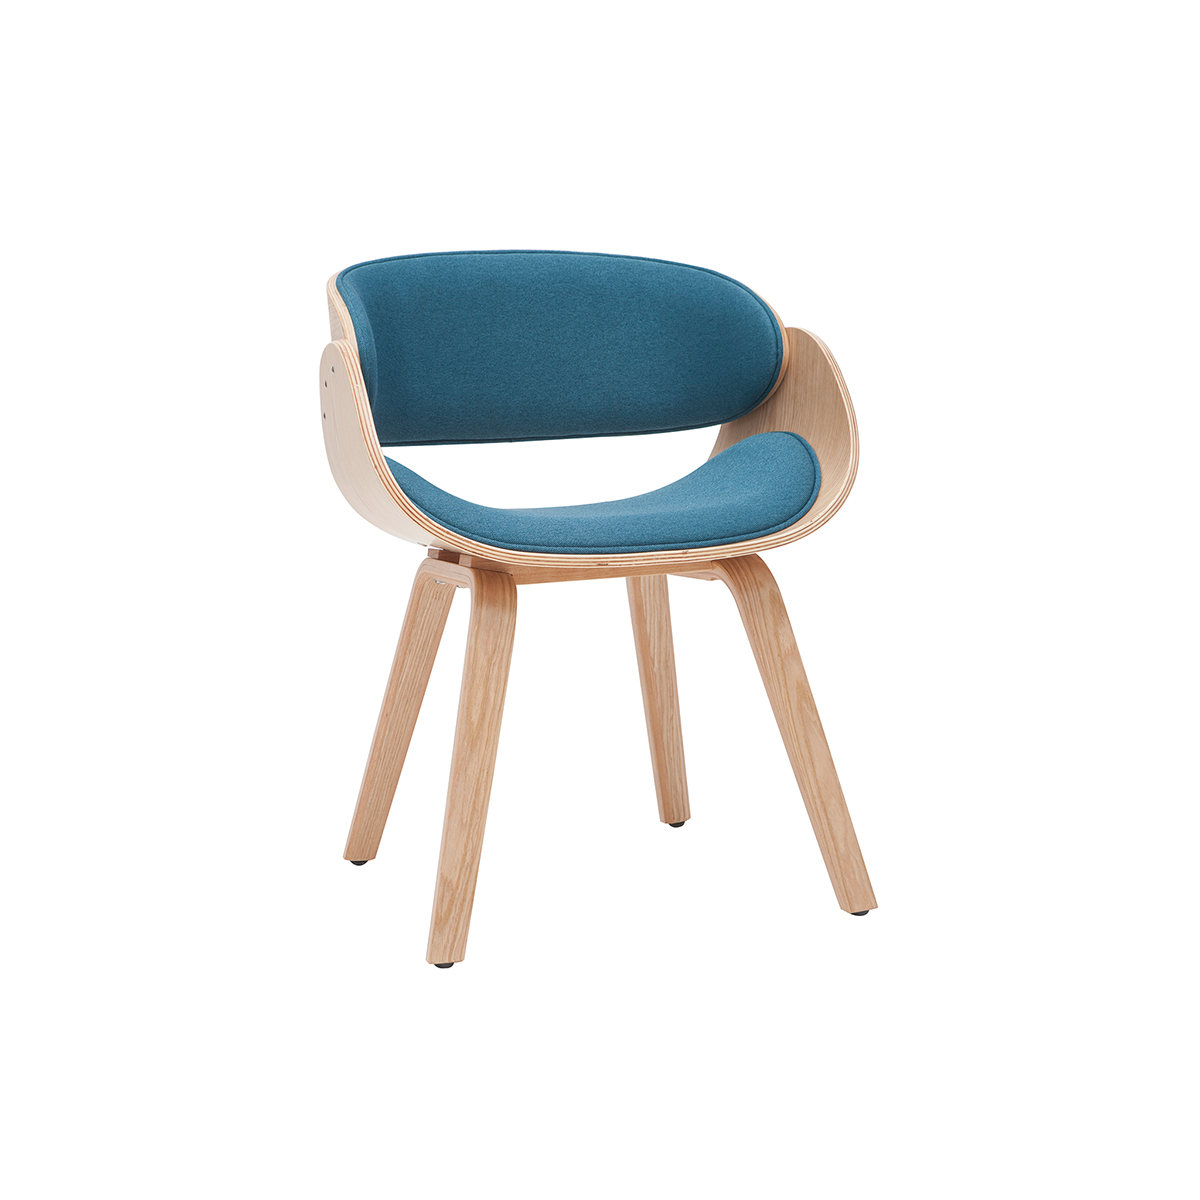 Chaise design tissu bleu canard et bois clair BENT vue1